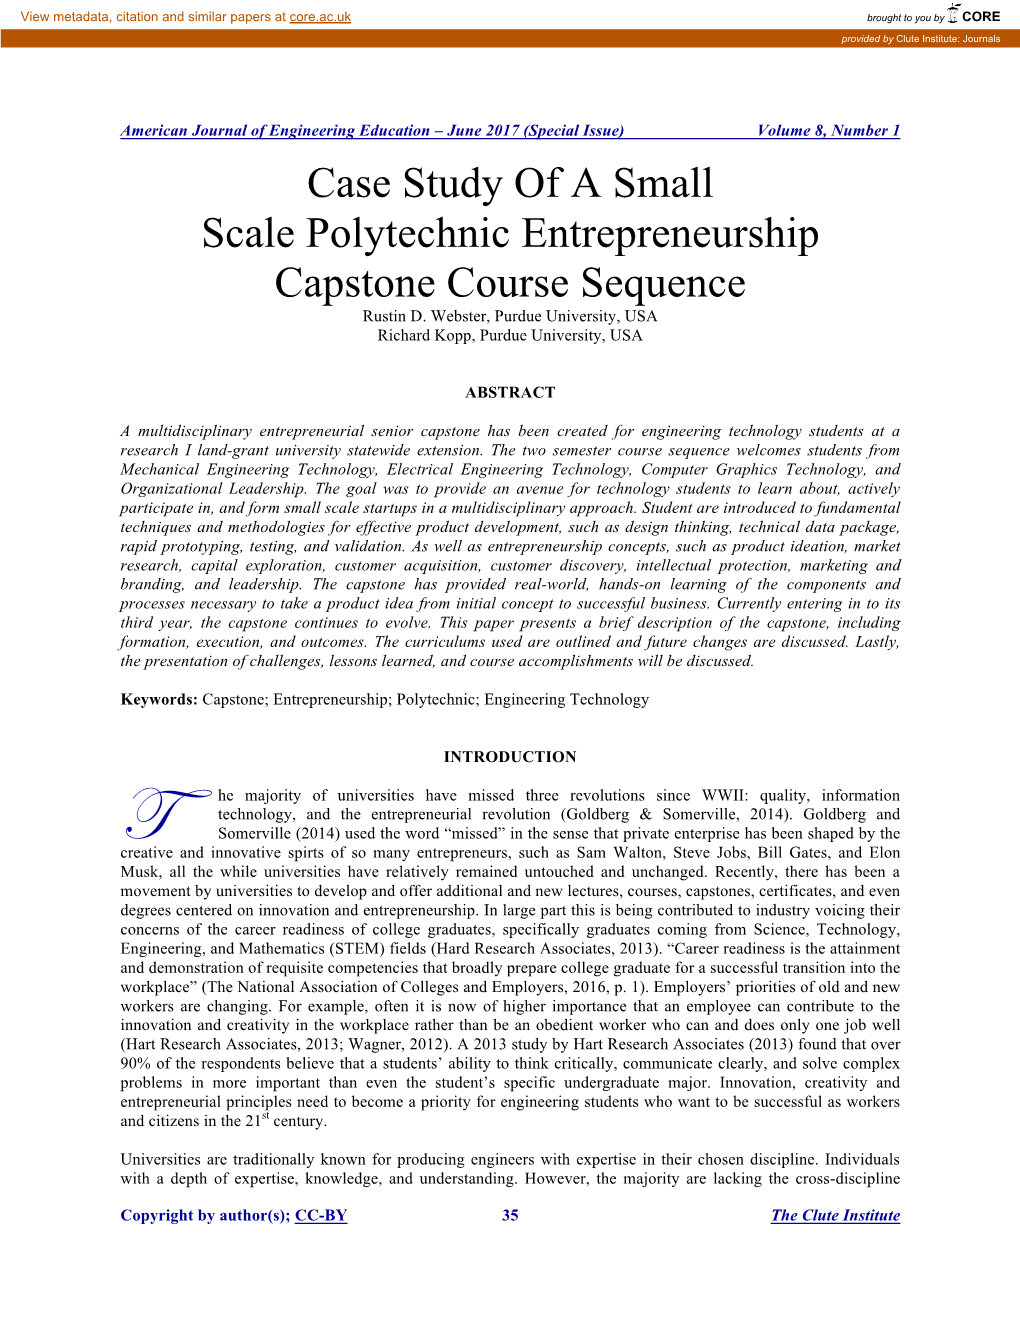 Case Study of a Small Scale Polytechnic Entrepreneurship Capstone Course Sequence Rustin D